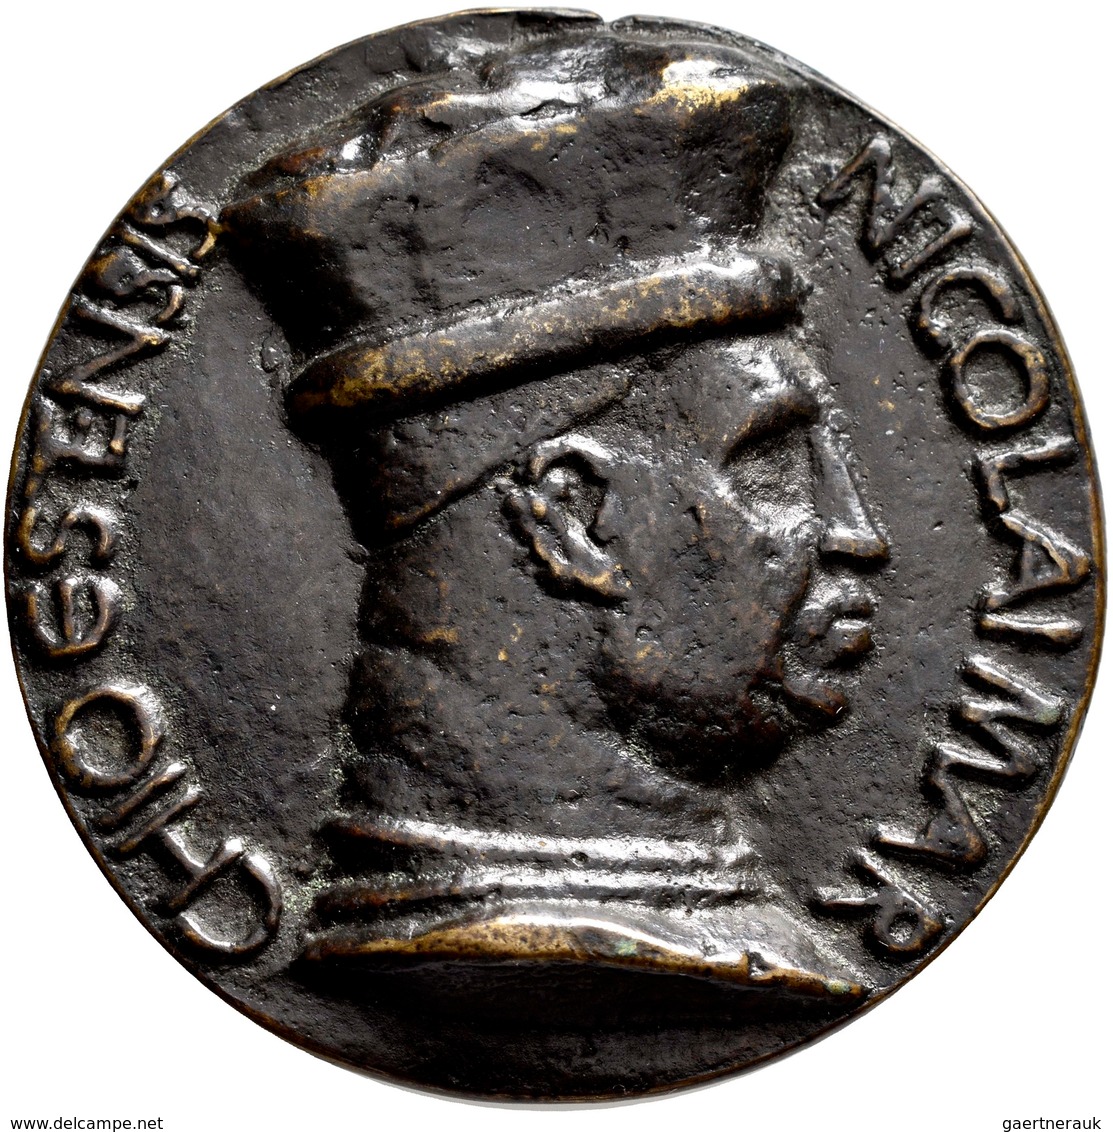 Medaillen Alle Welt: Italien-Ferrara, Niccolo III. D'Este 1383-1441: Bronzegussmedaille O. J. Von Am - Sin Clasificación